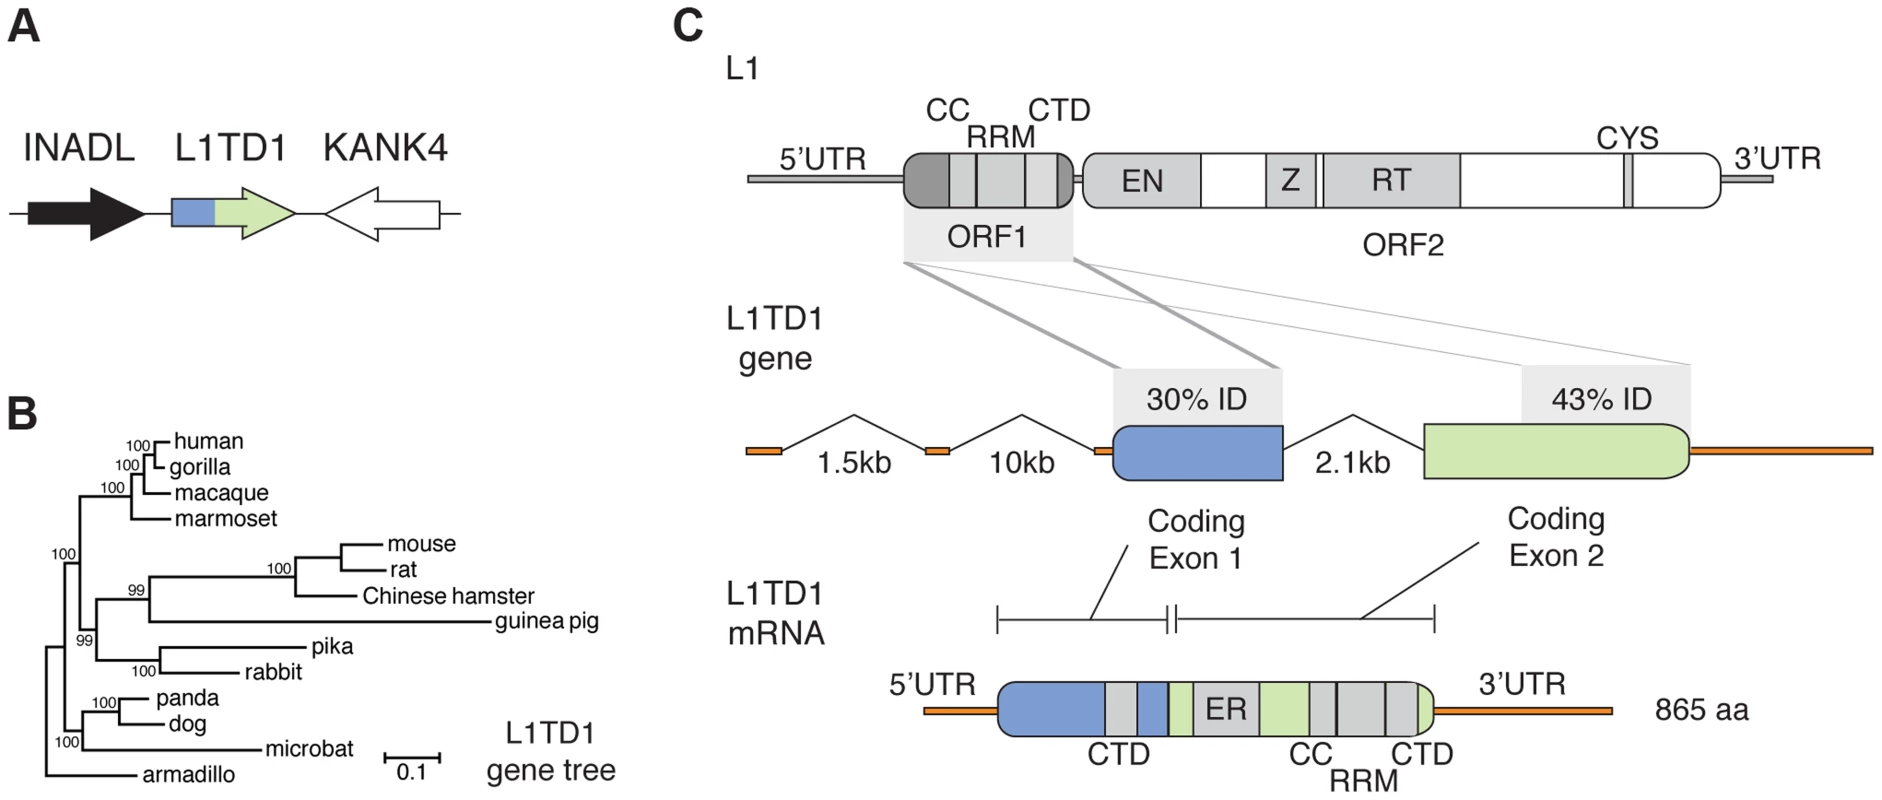 The mammalian <i>L1TD1</i> gene was born from a tandem insertion of L1 ORF1.